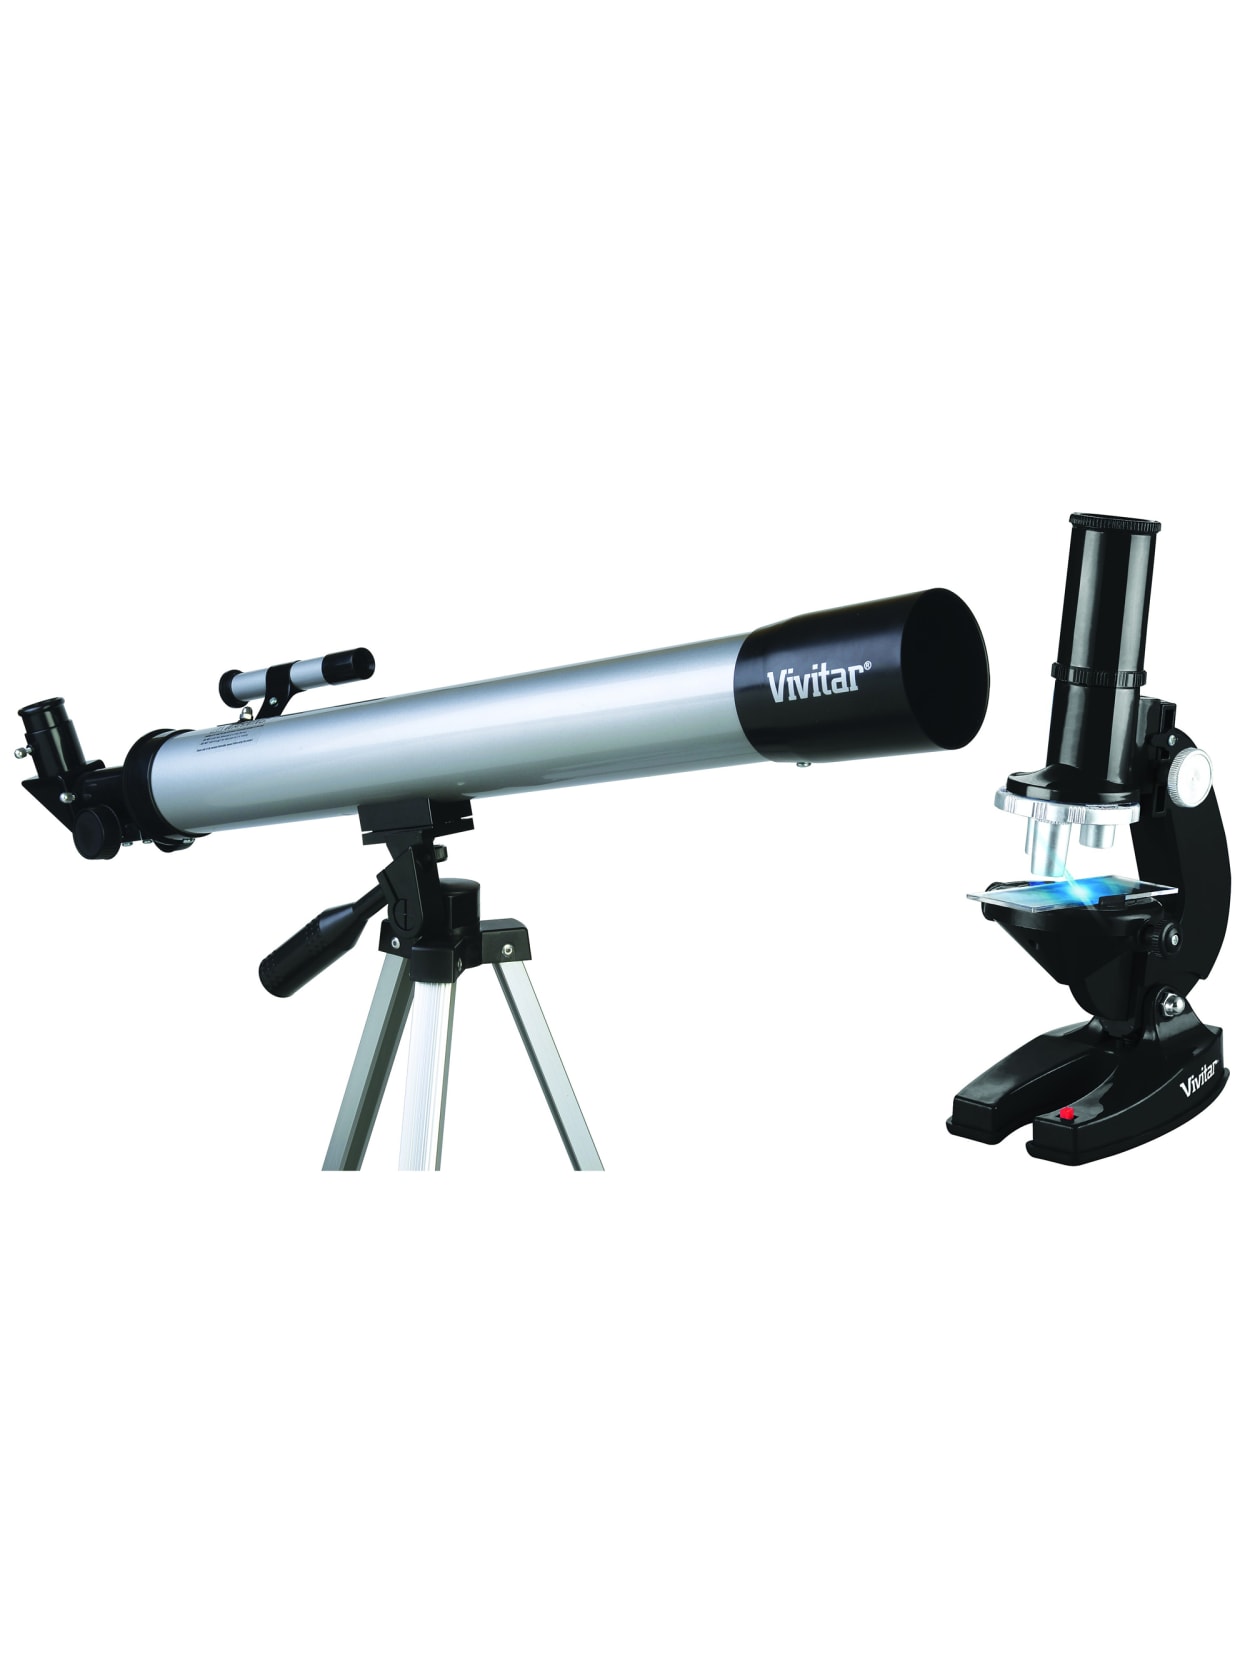 vivitar telescope review